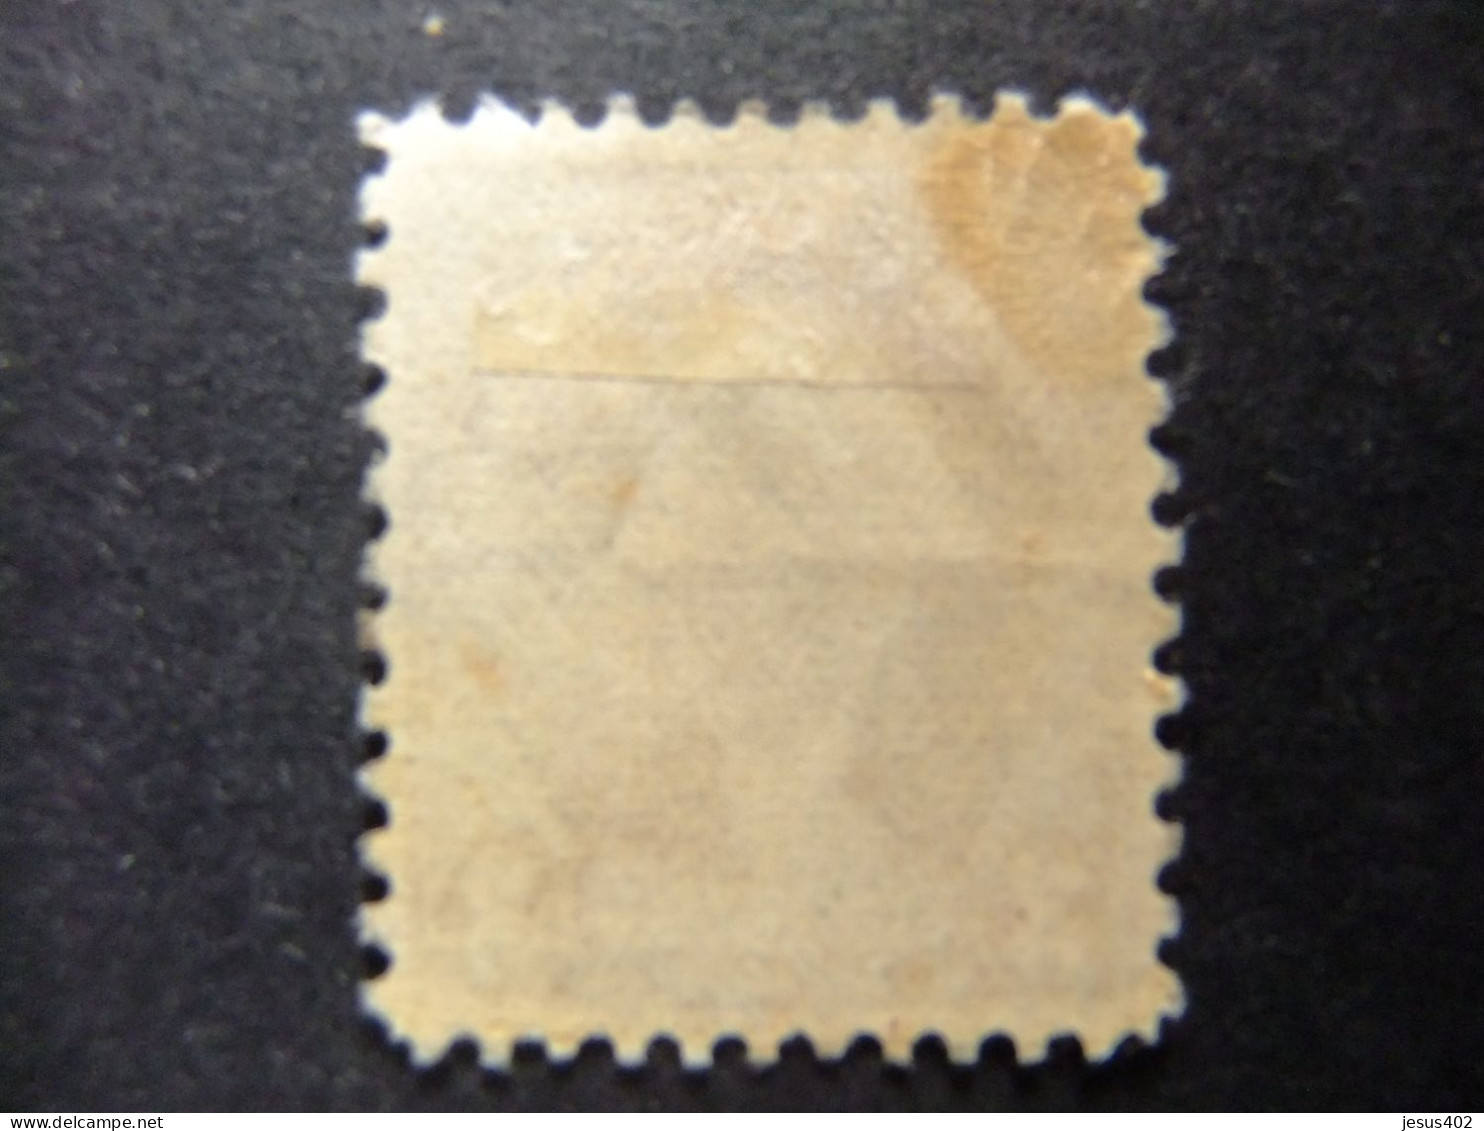 ESTADOS UNIDOS / ETATS-UNIS D'AMERIQUE 1932 / PRESIDENTE WASHINGTON YVERT 313 * MH - Unused Stamps